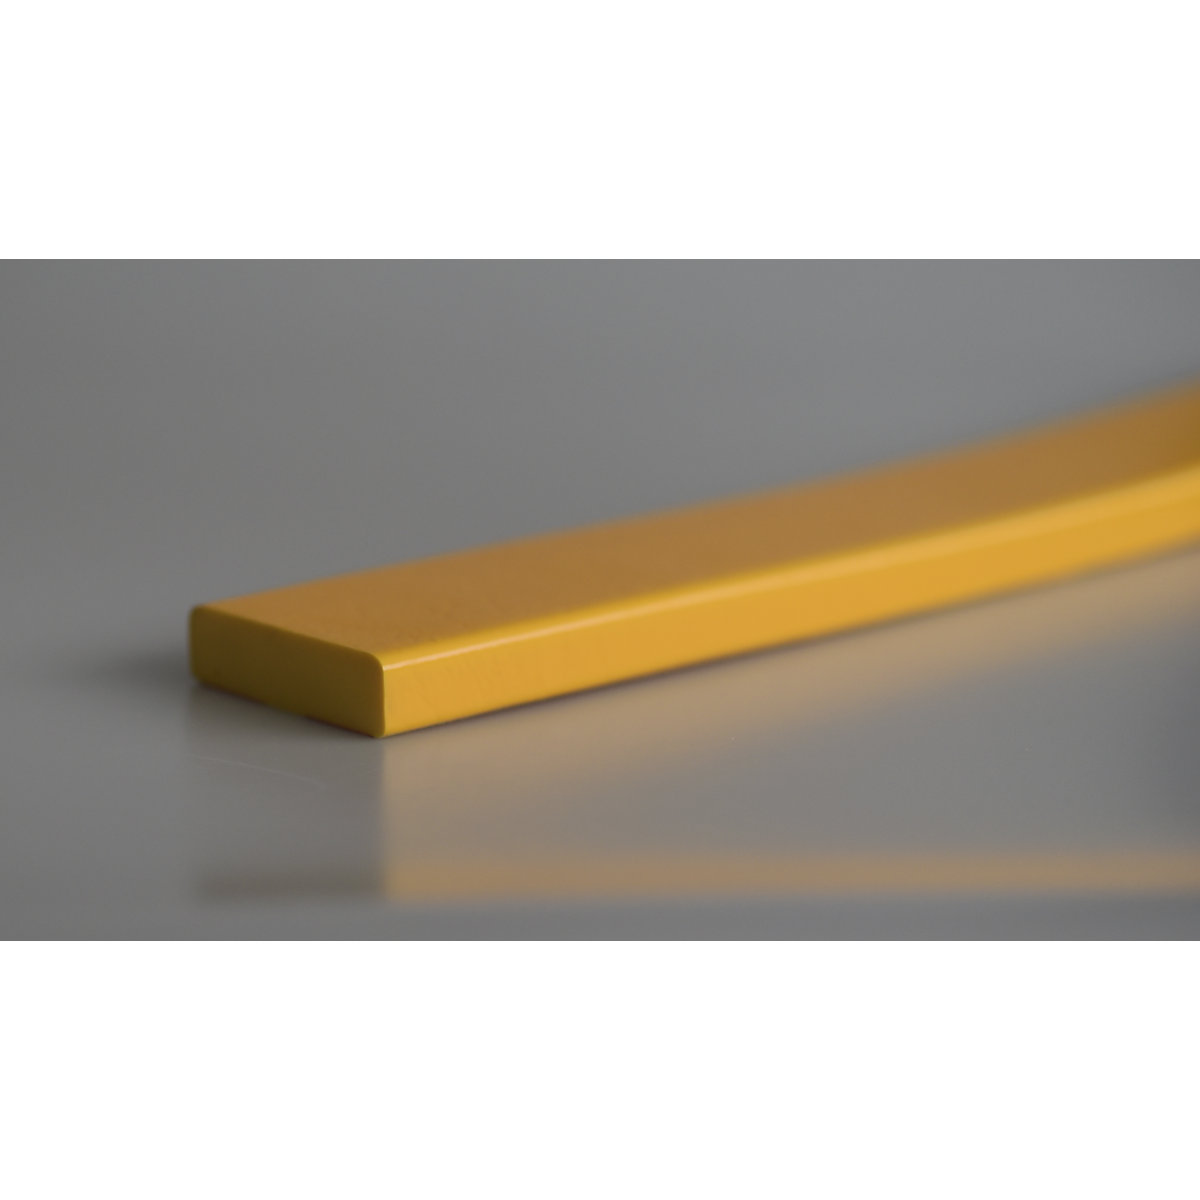 Knuffi®-oppervlaktebescherming – SHG, type S, stuk van 1 m, geel-19